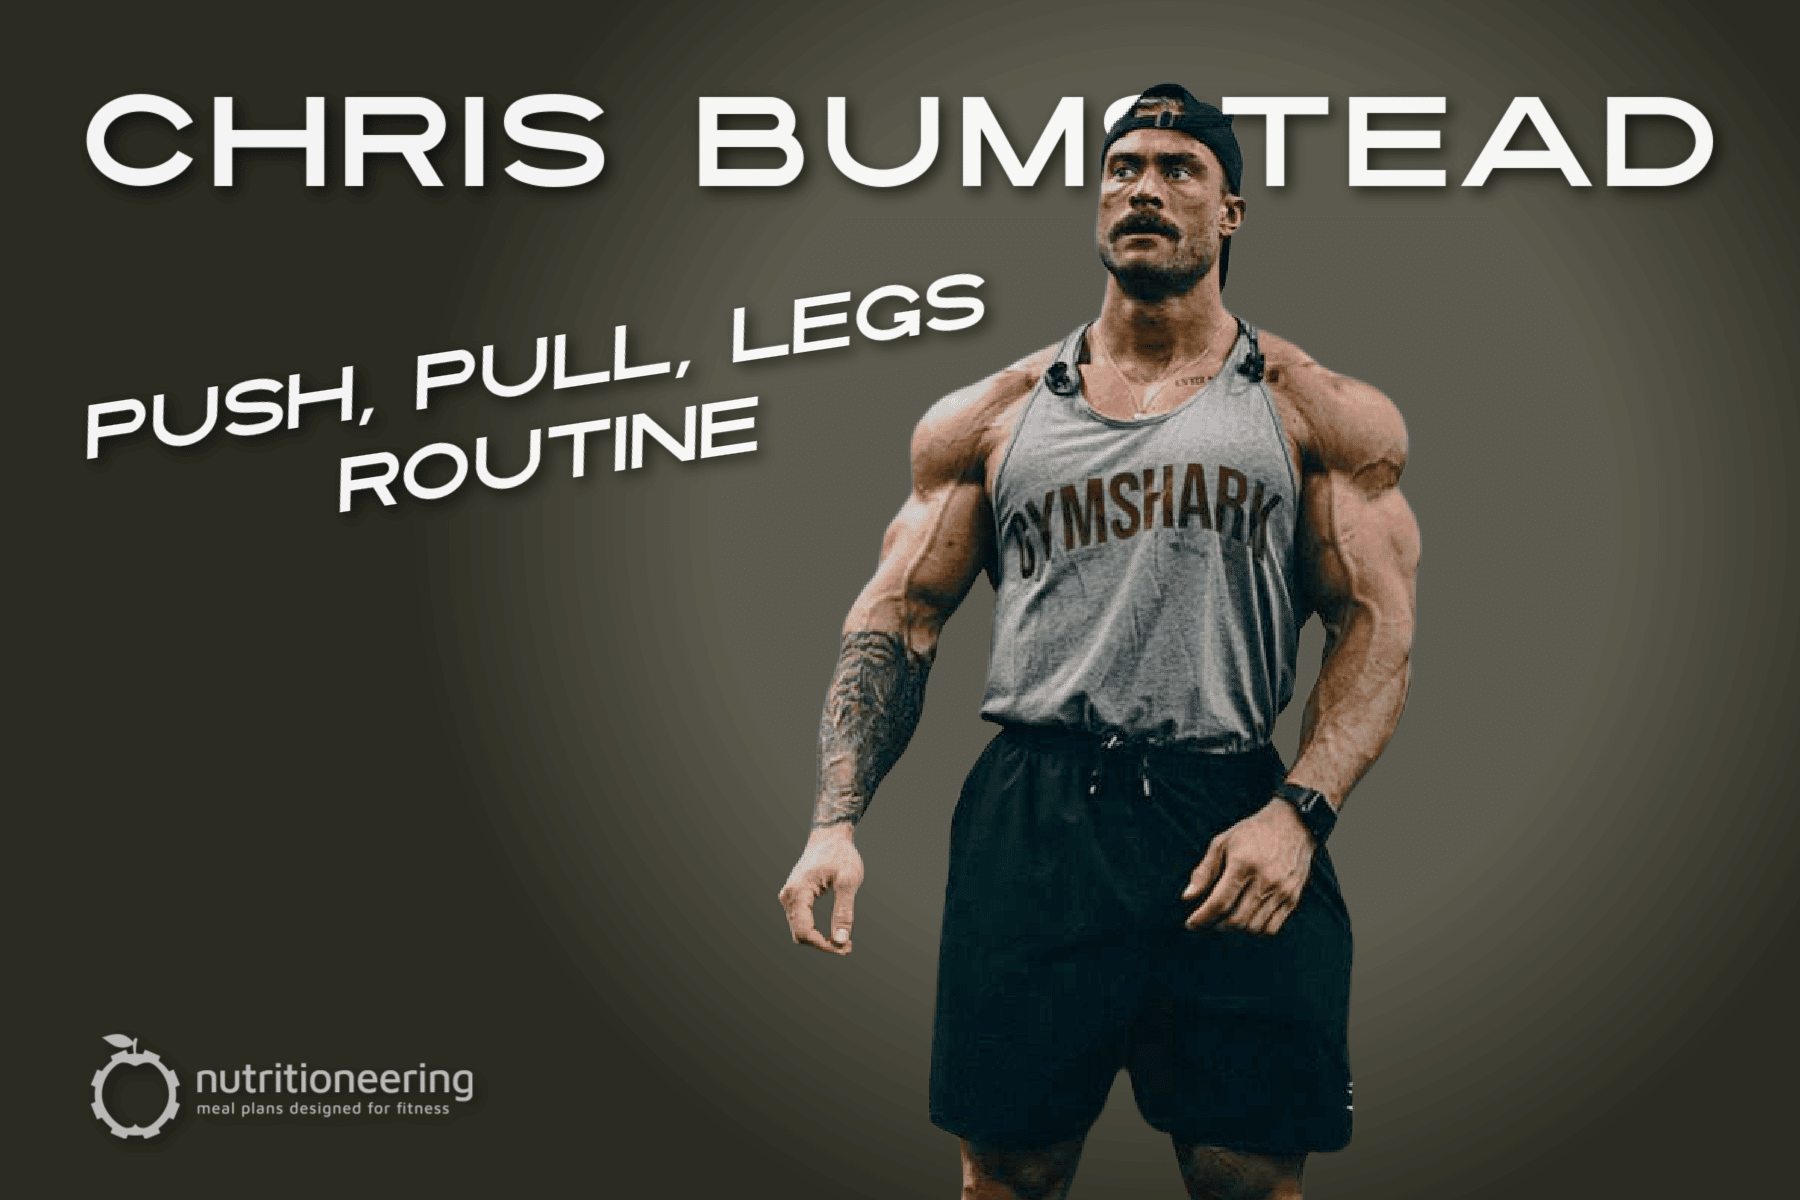 Chris Bumstead Push Pull Legs